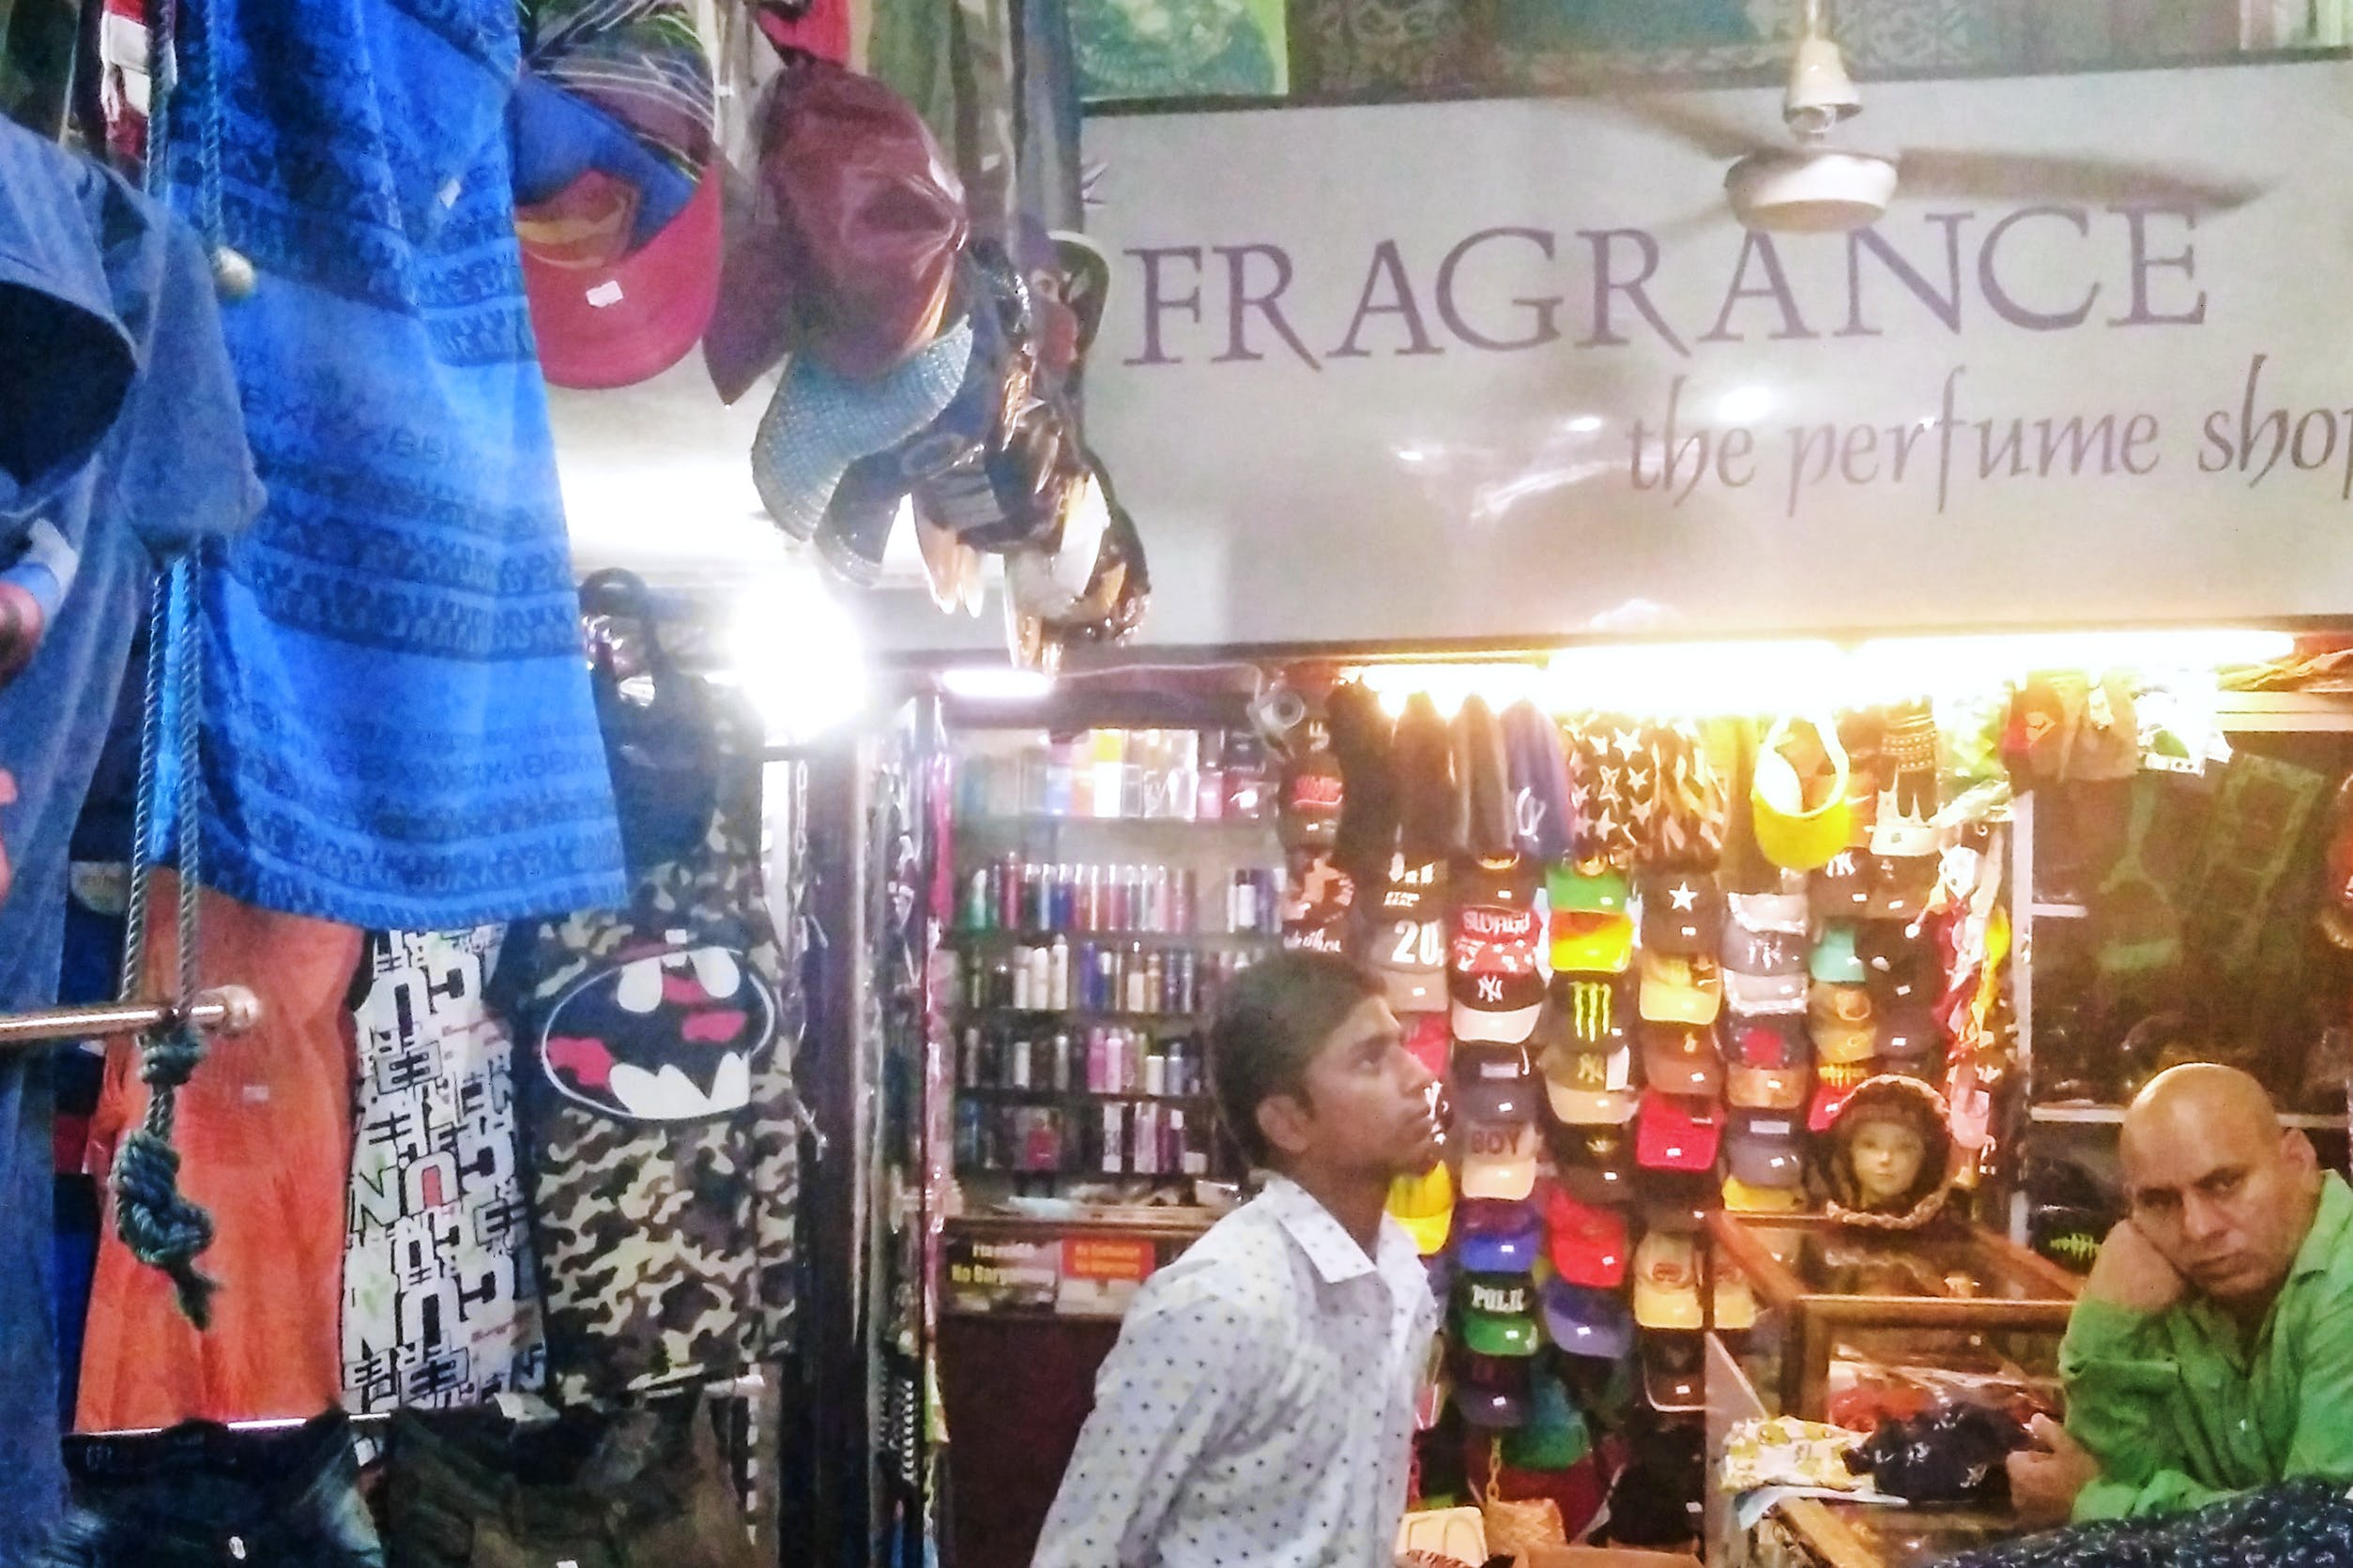 Bazaar,Selling,Market,Public space,Marketplace,Shopping,Retail,Human settlement,City,Event